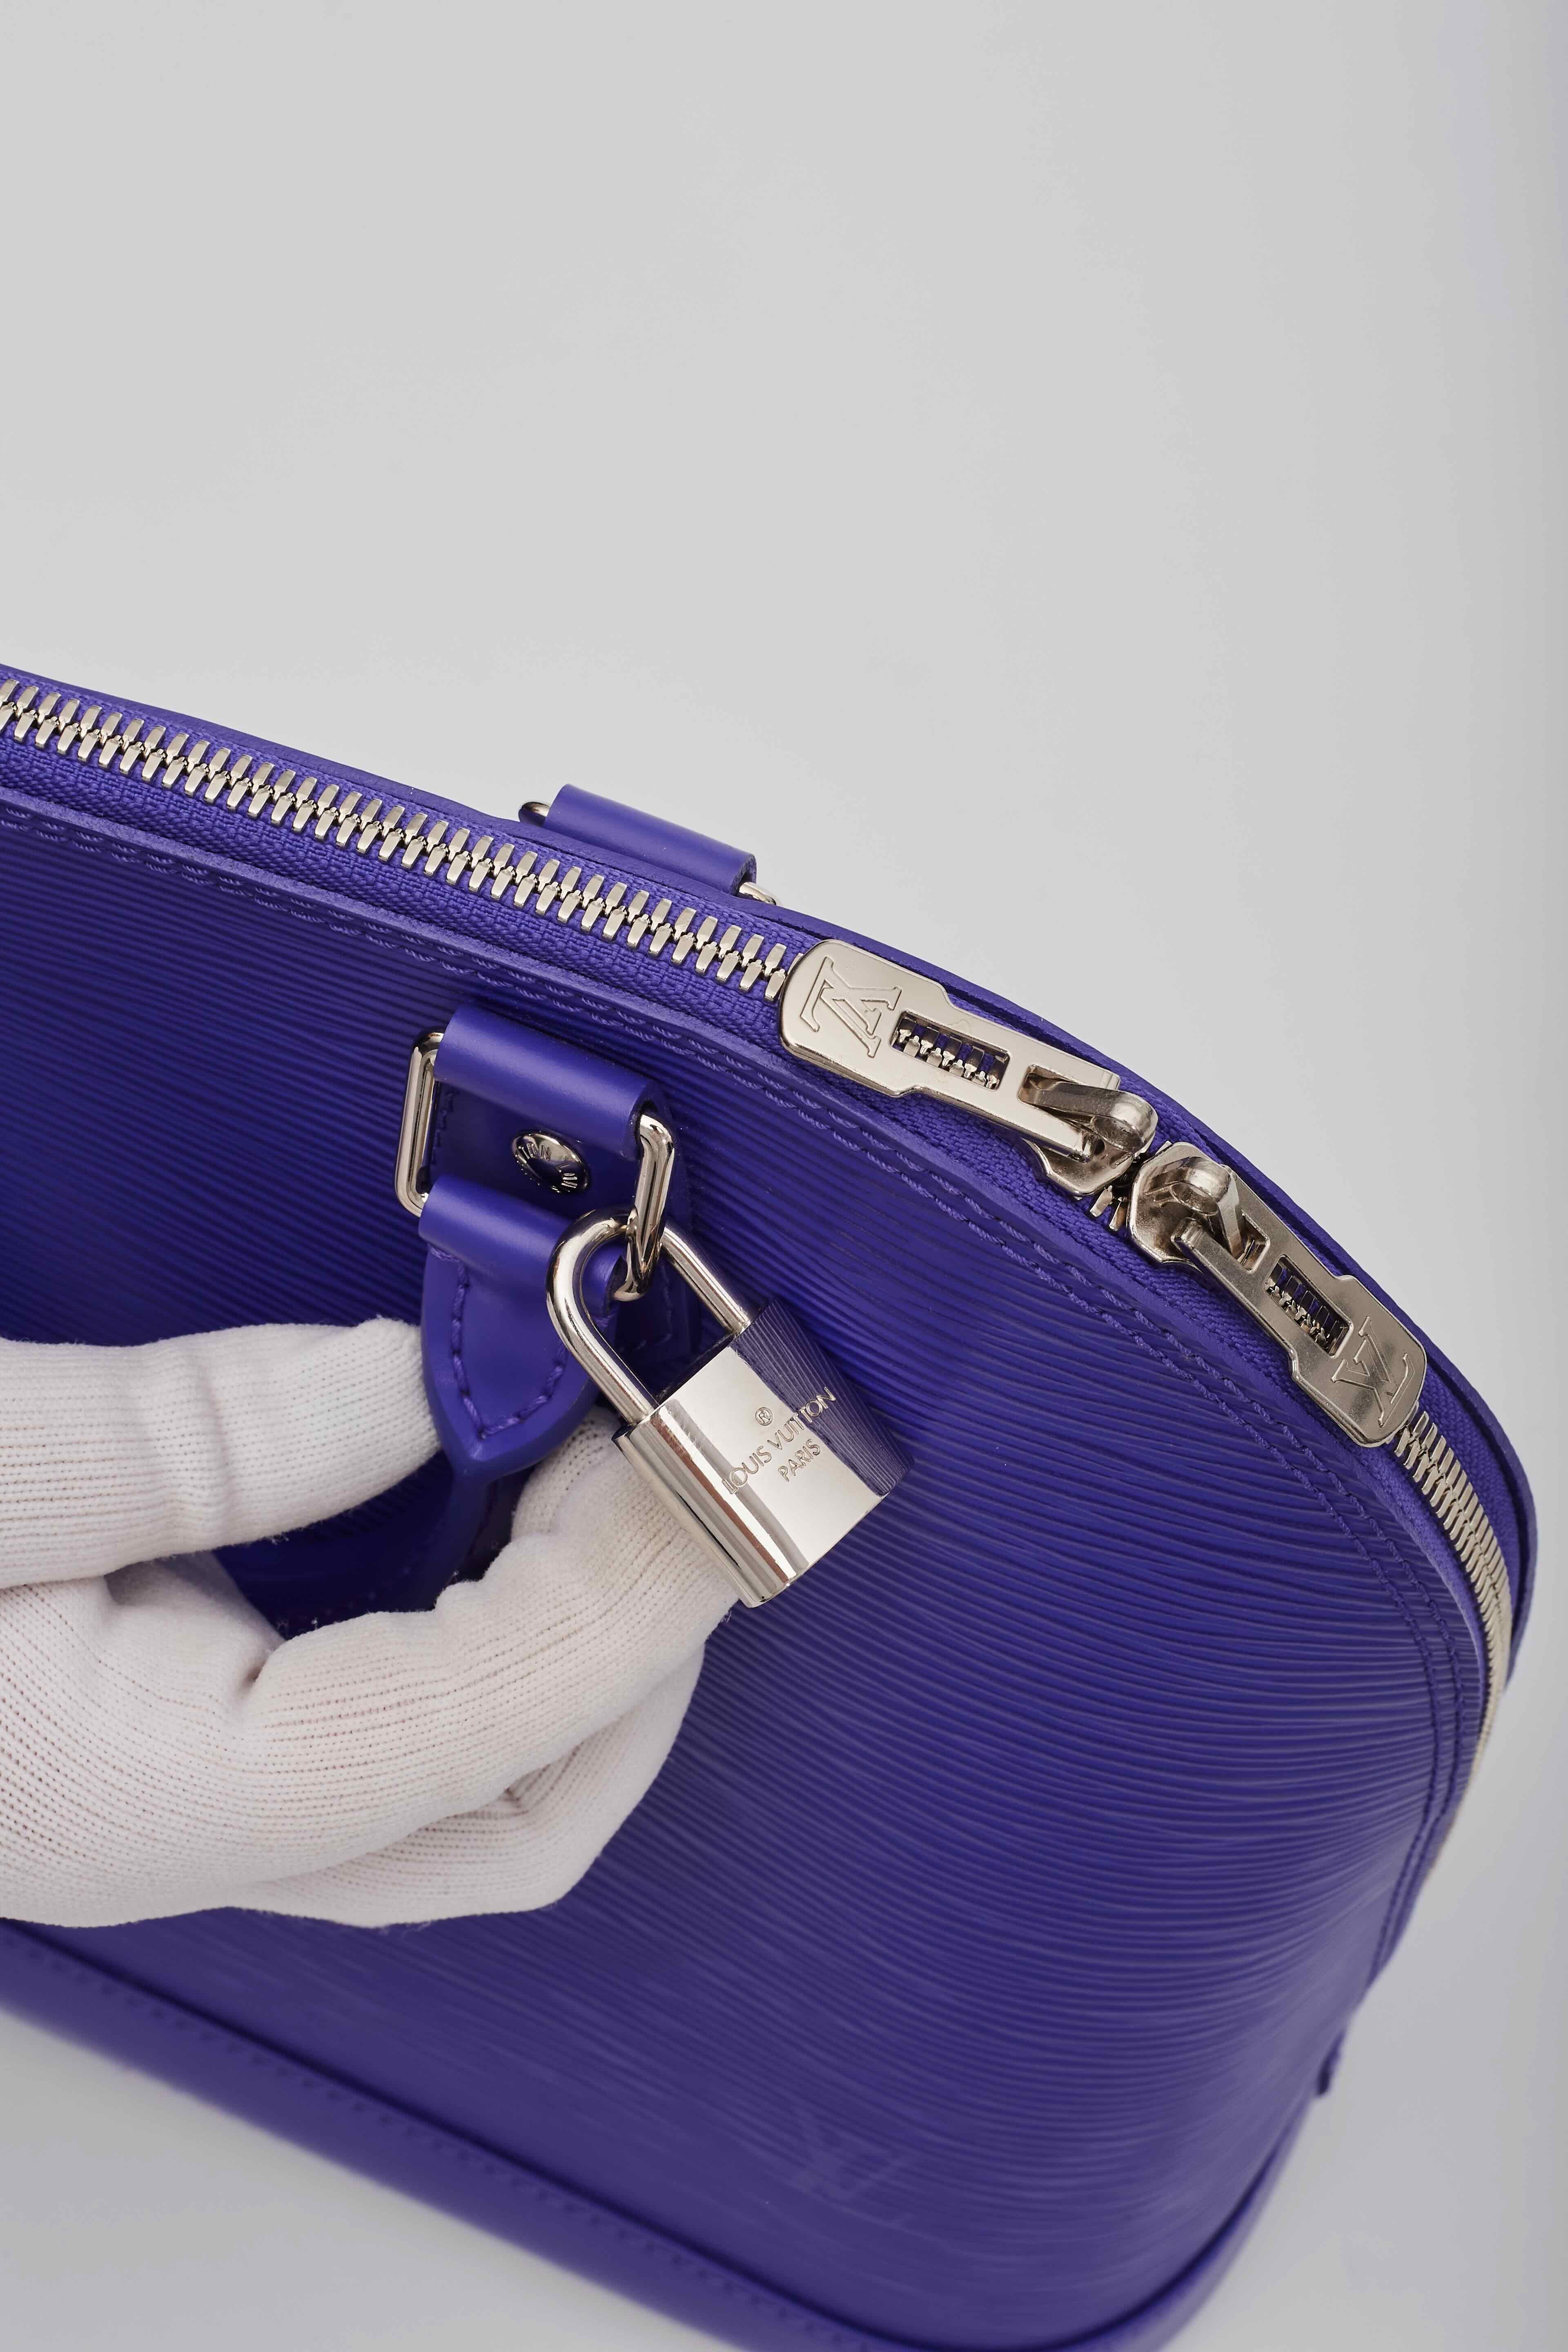 Louis Vuitton Epi Leather Purple Alma PM For Sale 5